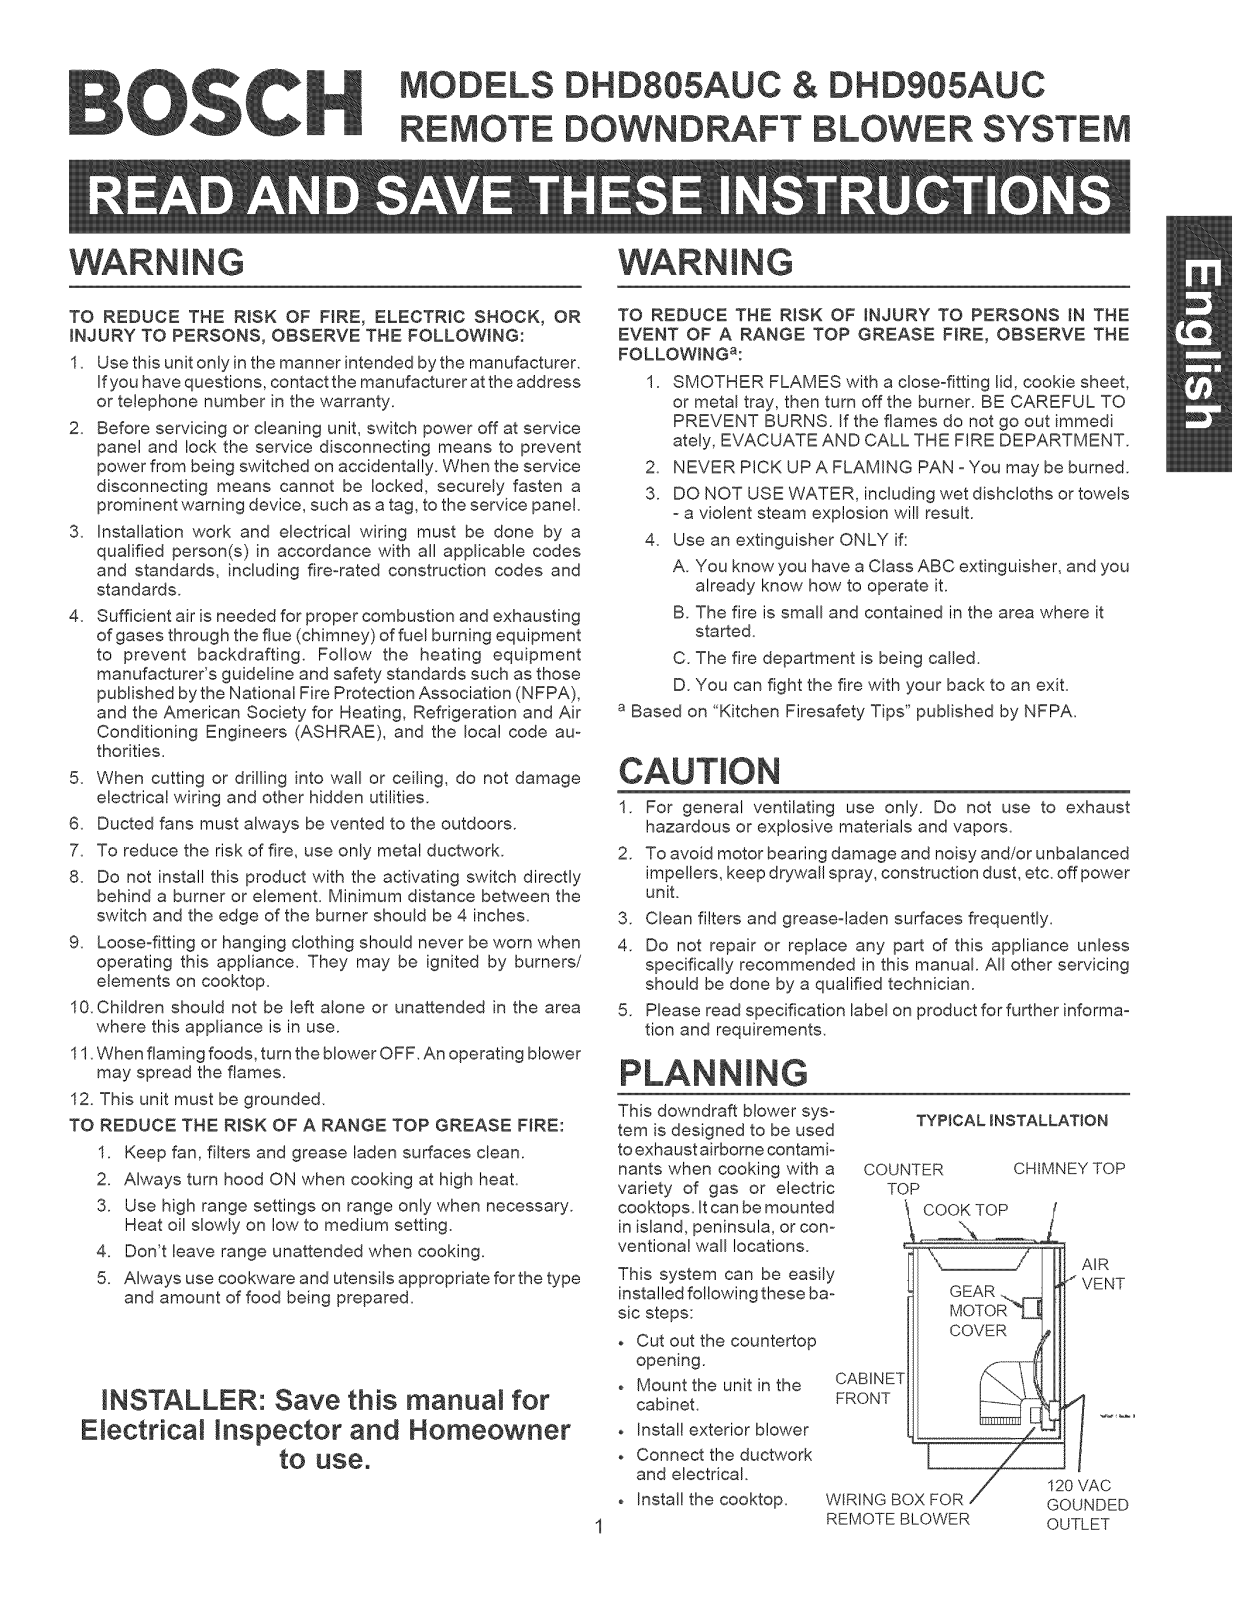 Bosch DHD905AUC, DHD805AUC Installation Guide